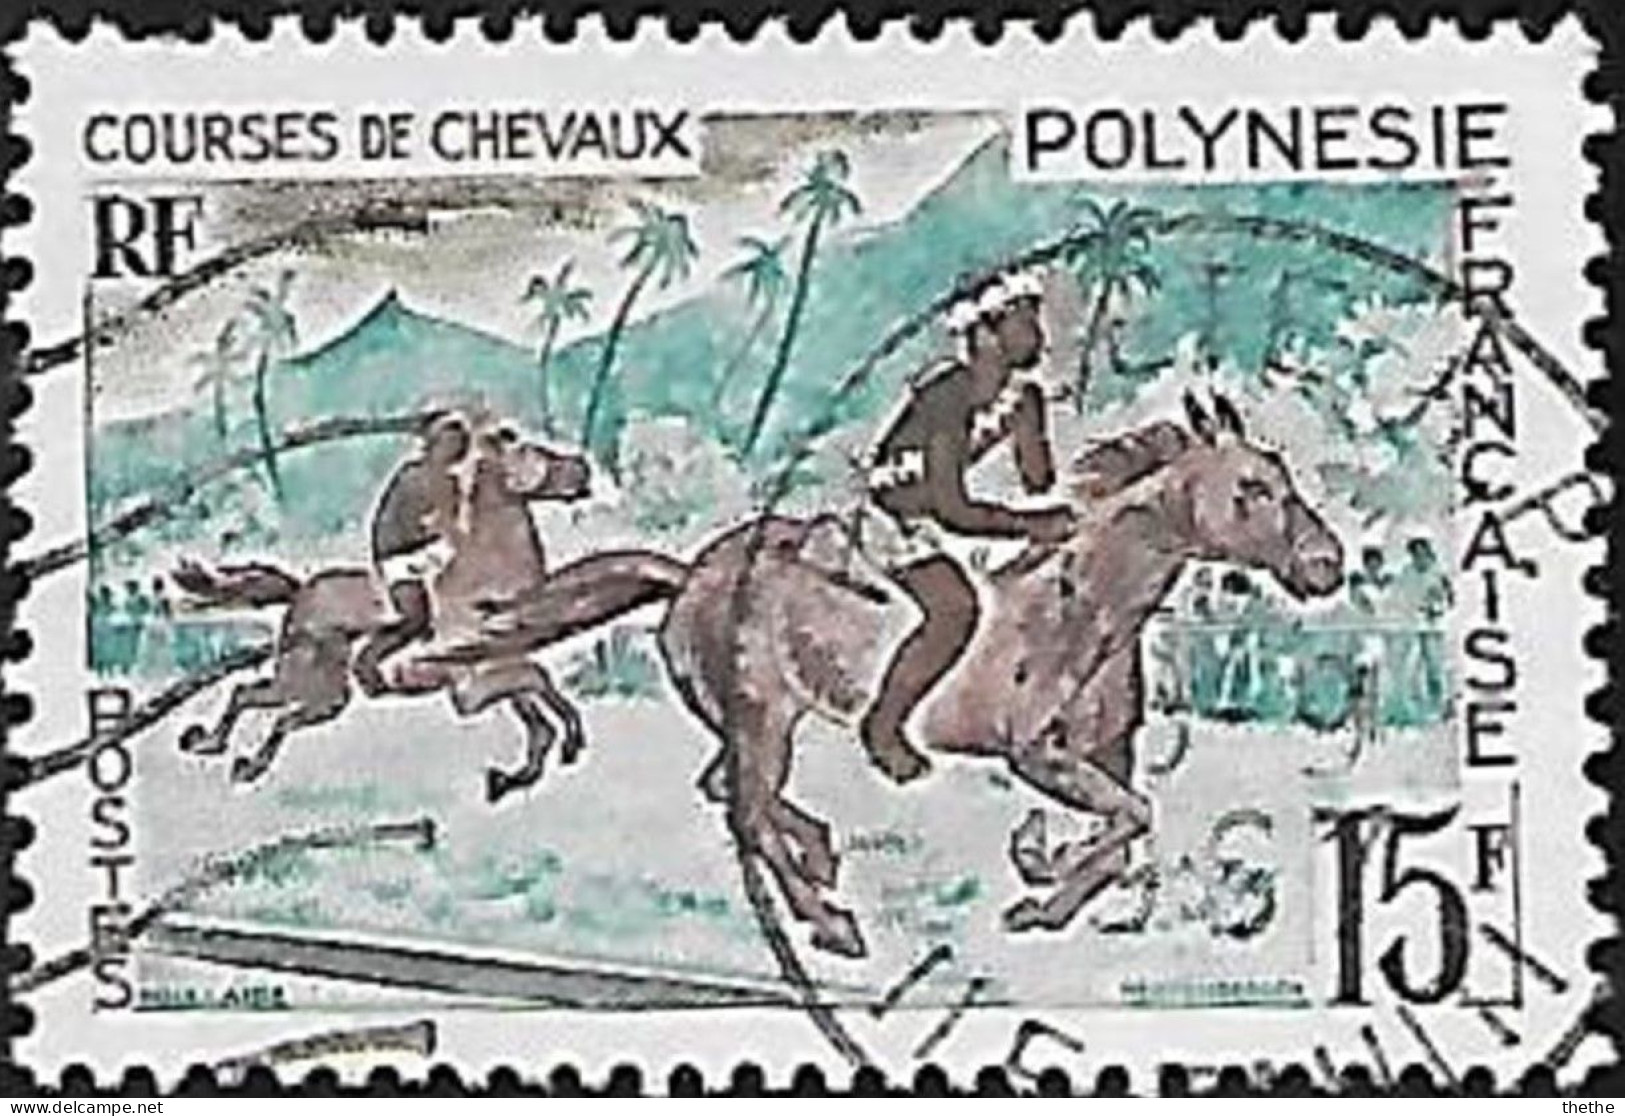 POLYNESIE - Courses De Chevaux - Used Stamps